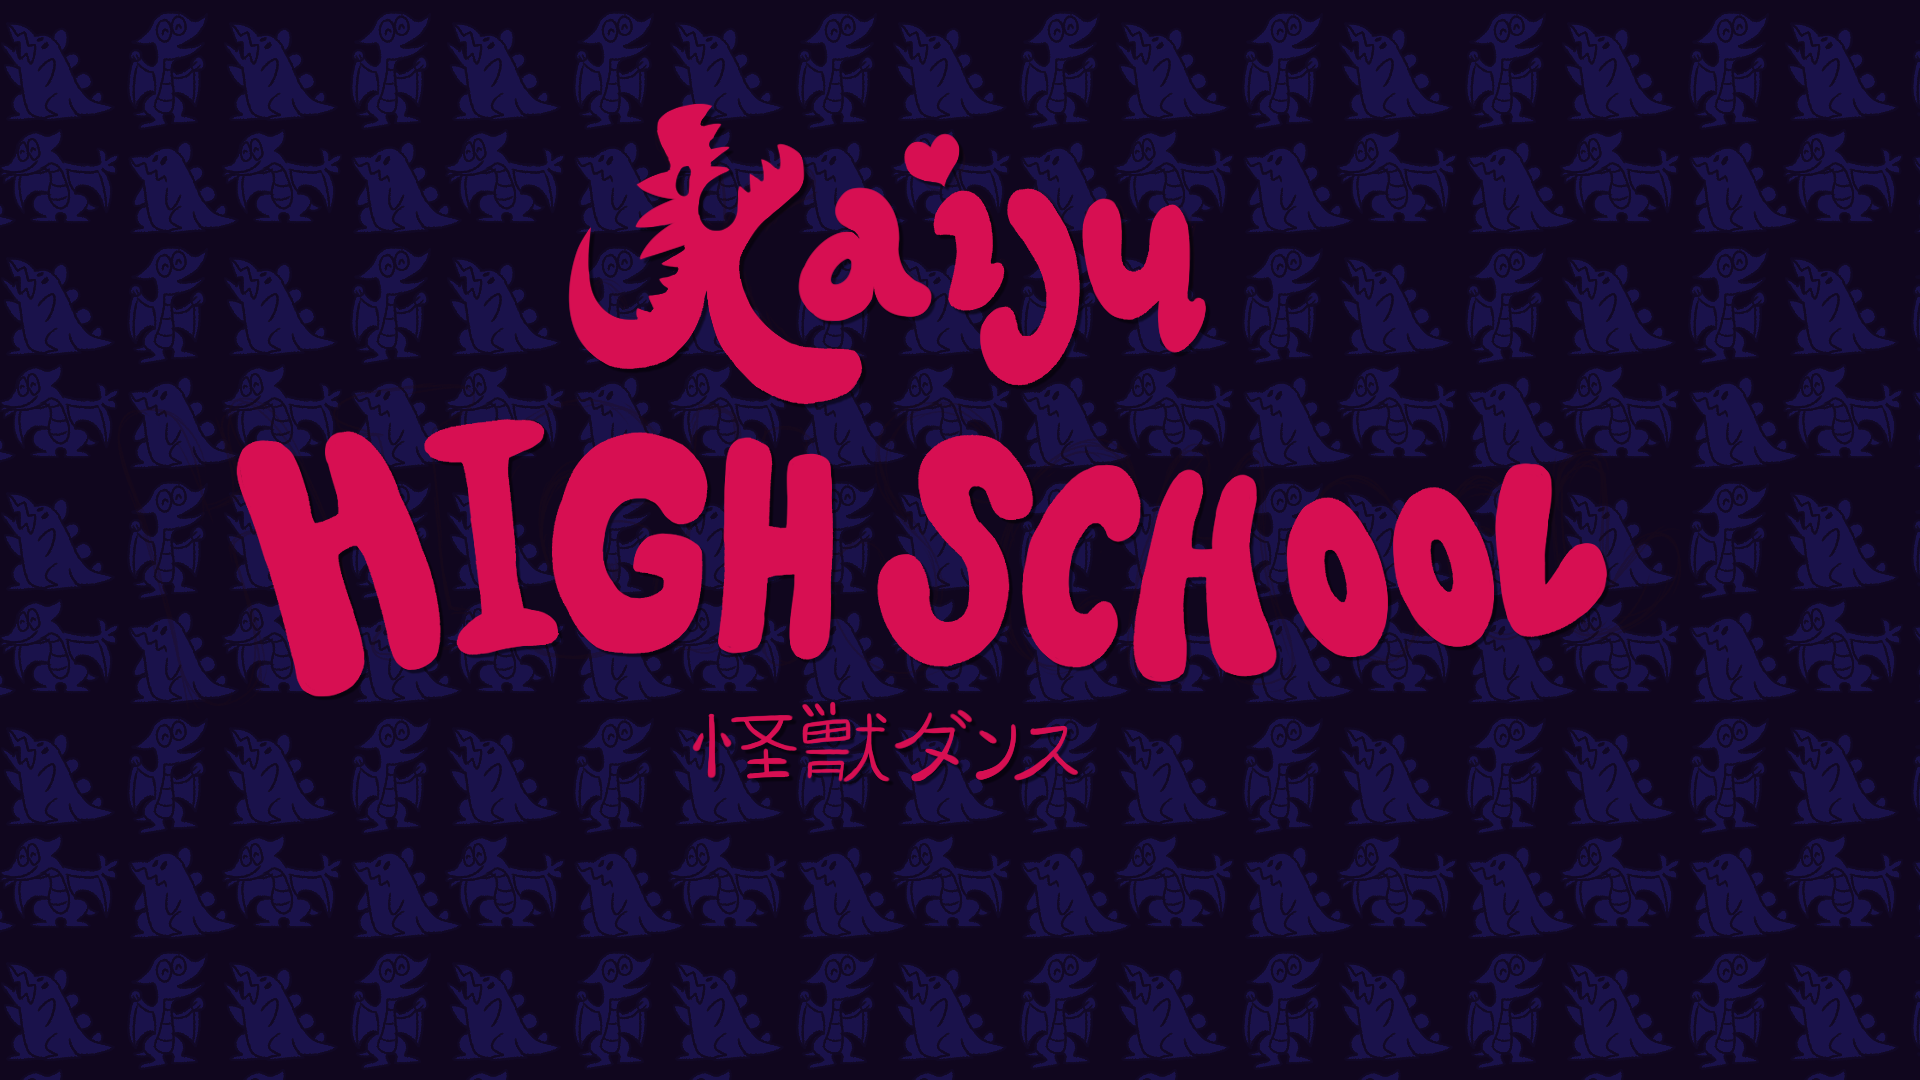 Kaiju High School